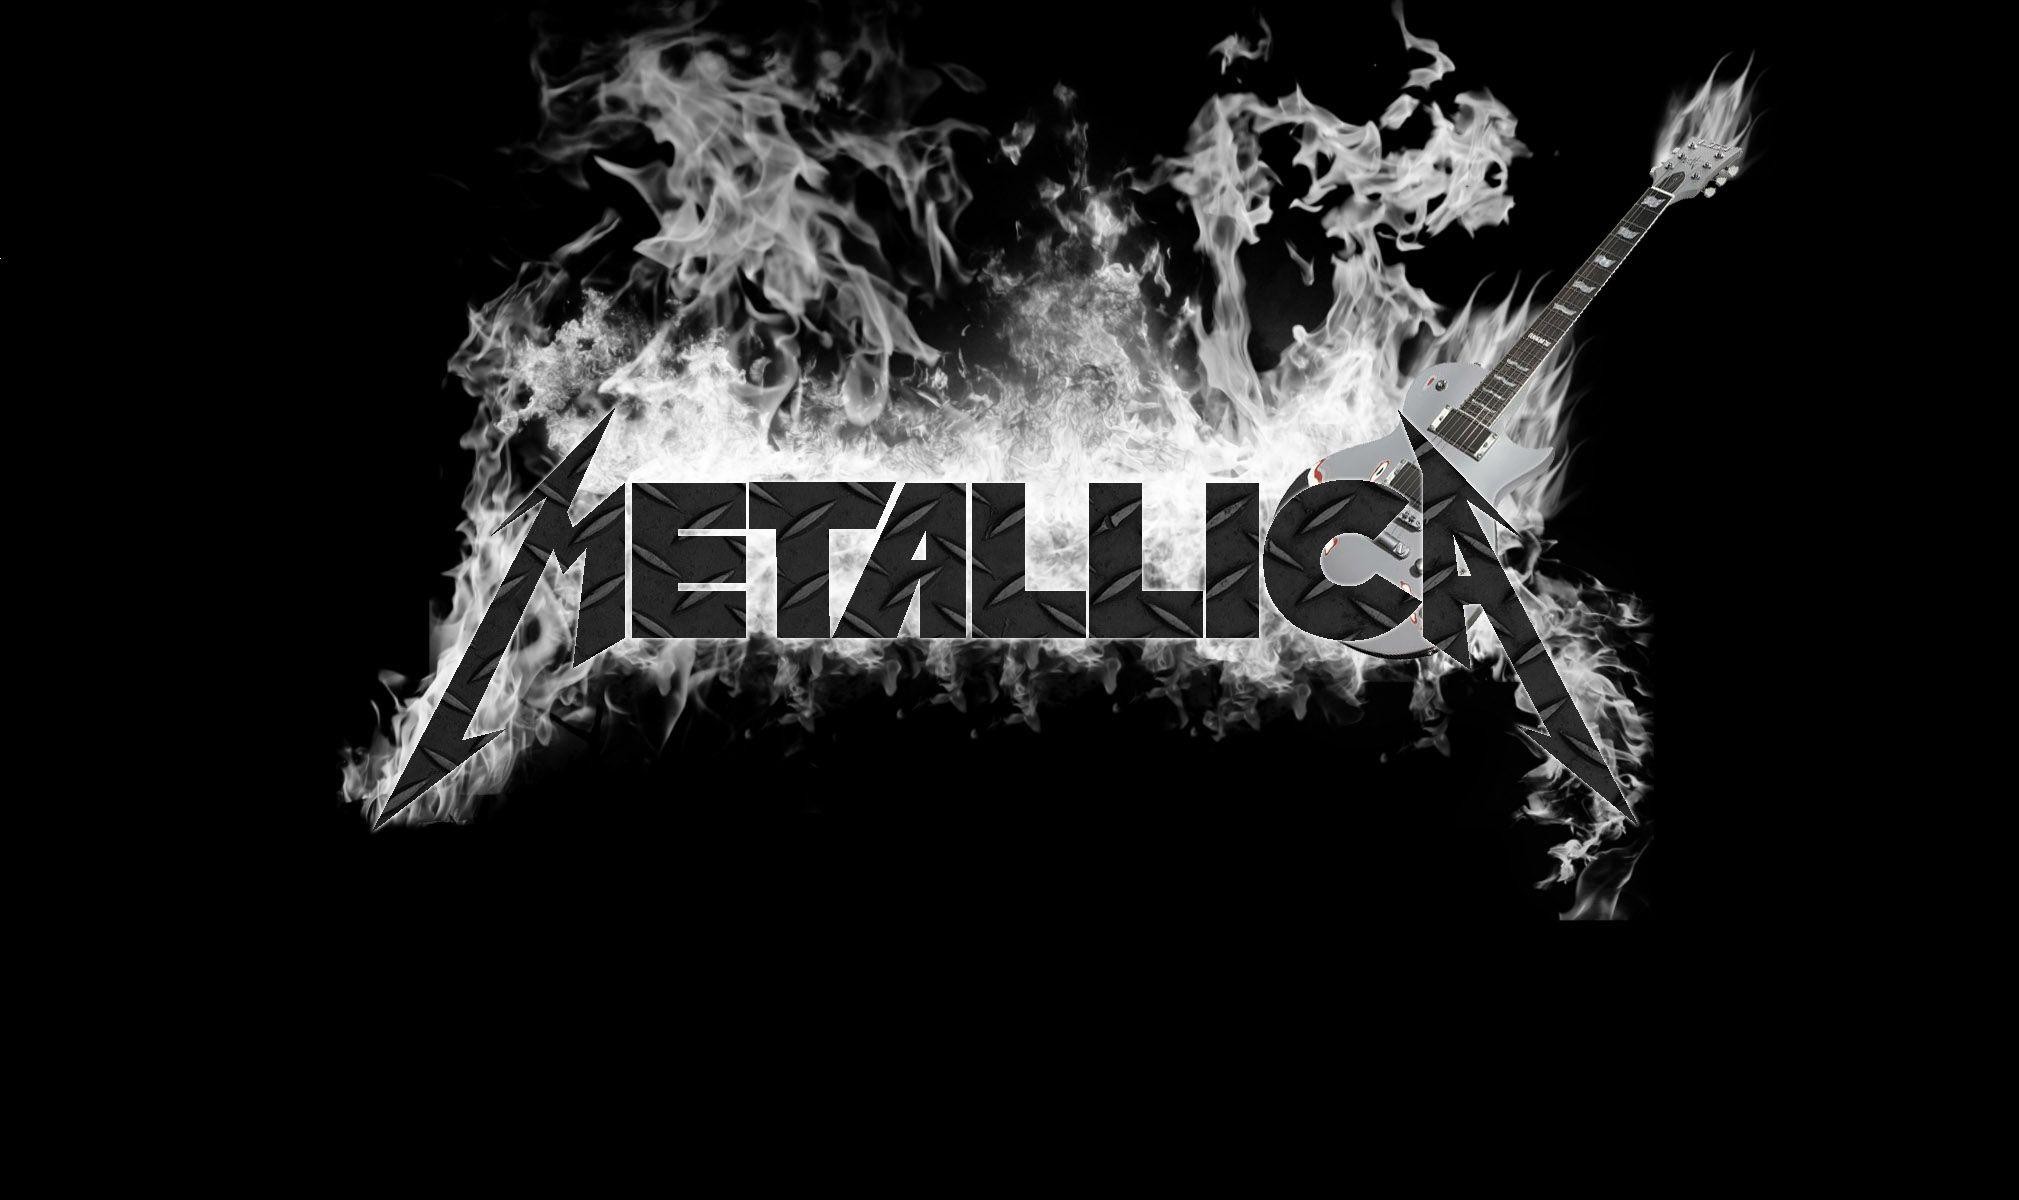 2019x1200 Metallica Smoke Logo Wallpaper Wide or HD | Digital Art Wallpapers